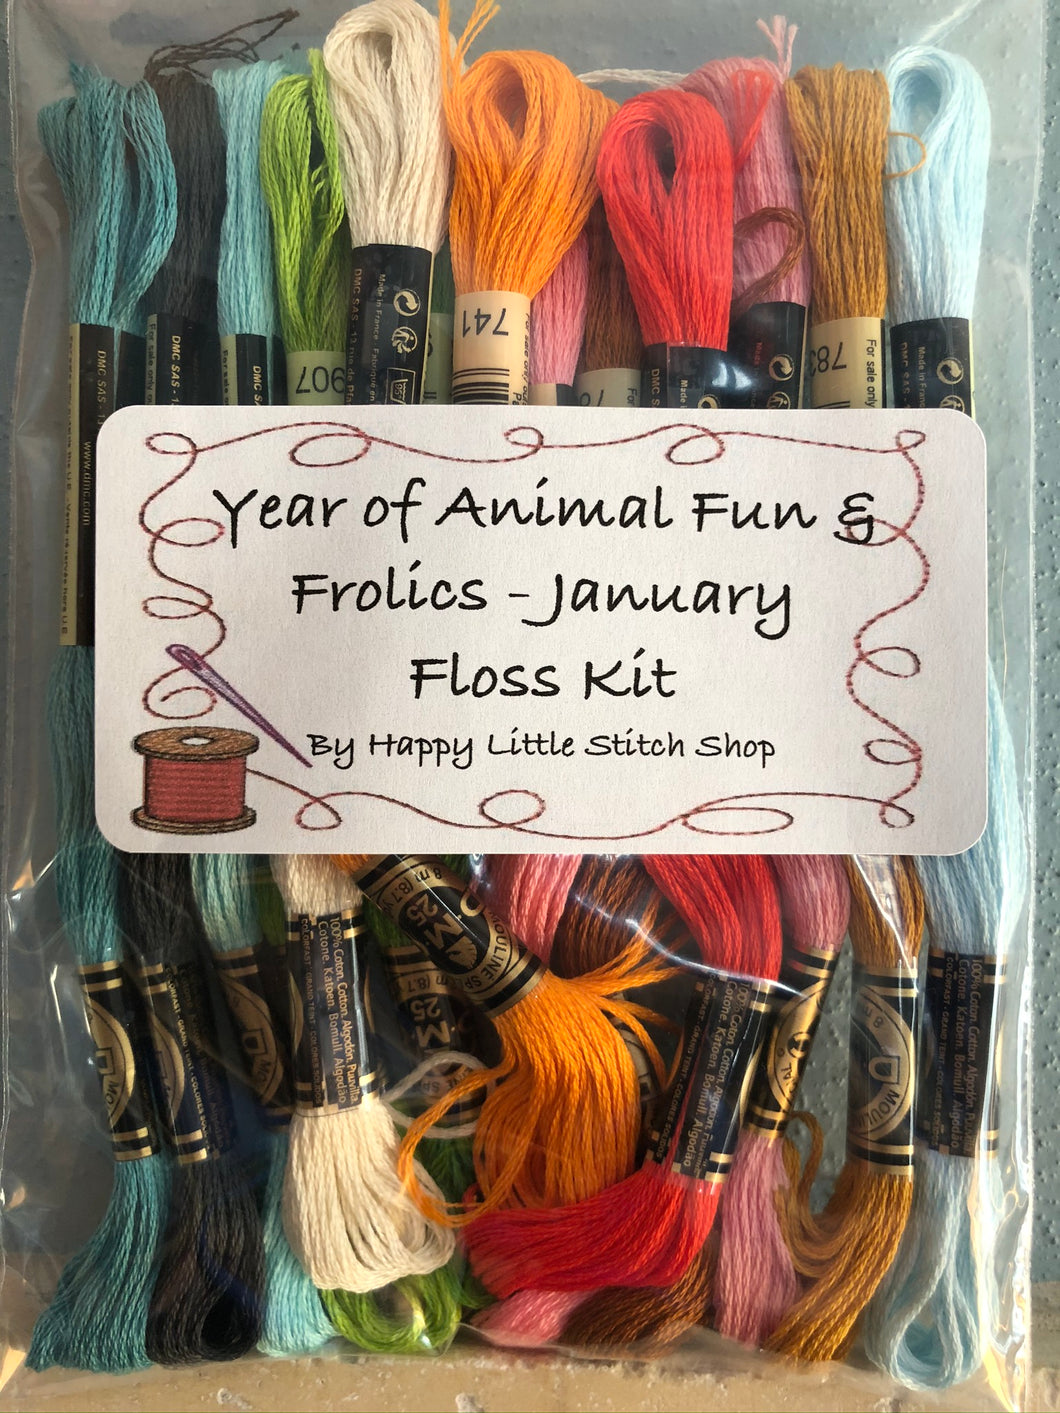 Floss Kit - Year of Animal Fun & Frolics - January